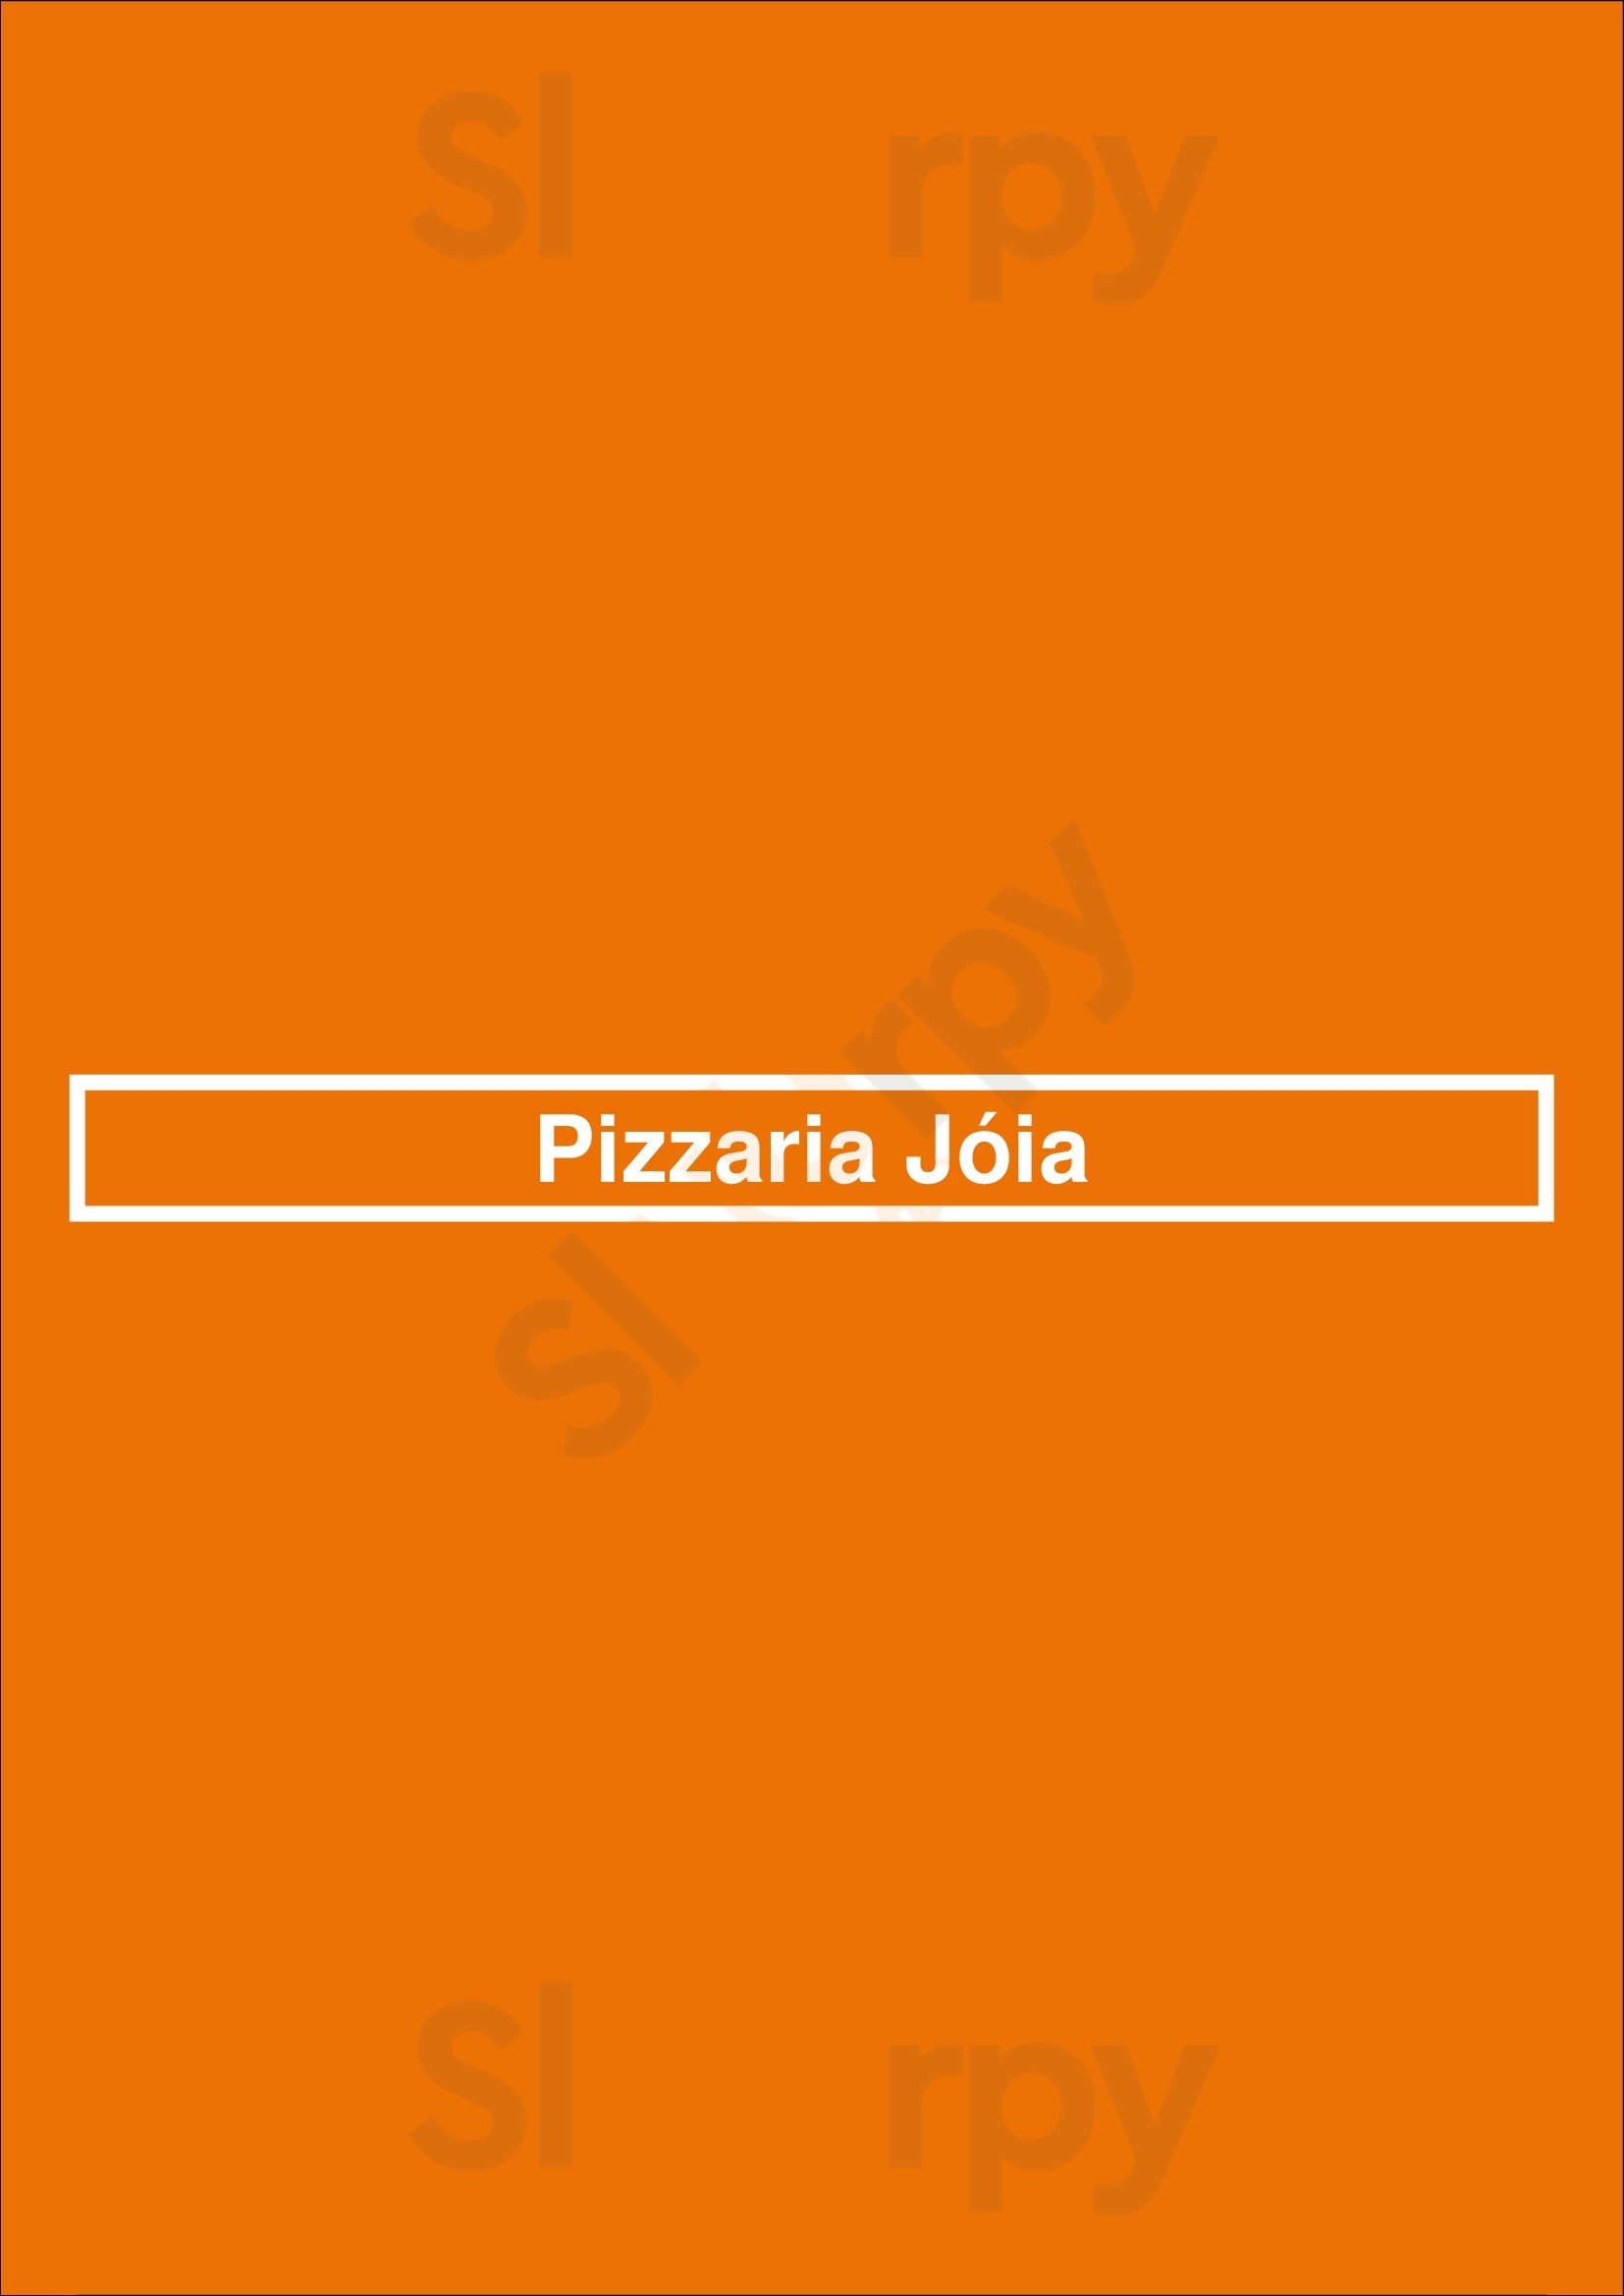 Pizzaria Jóia Santo André Menu - 1